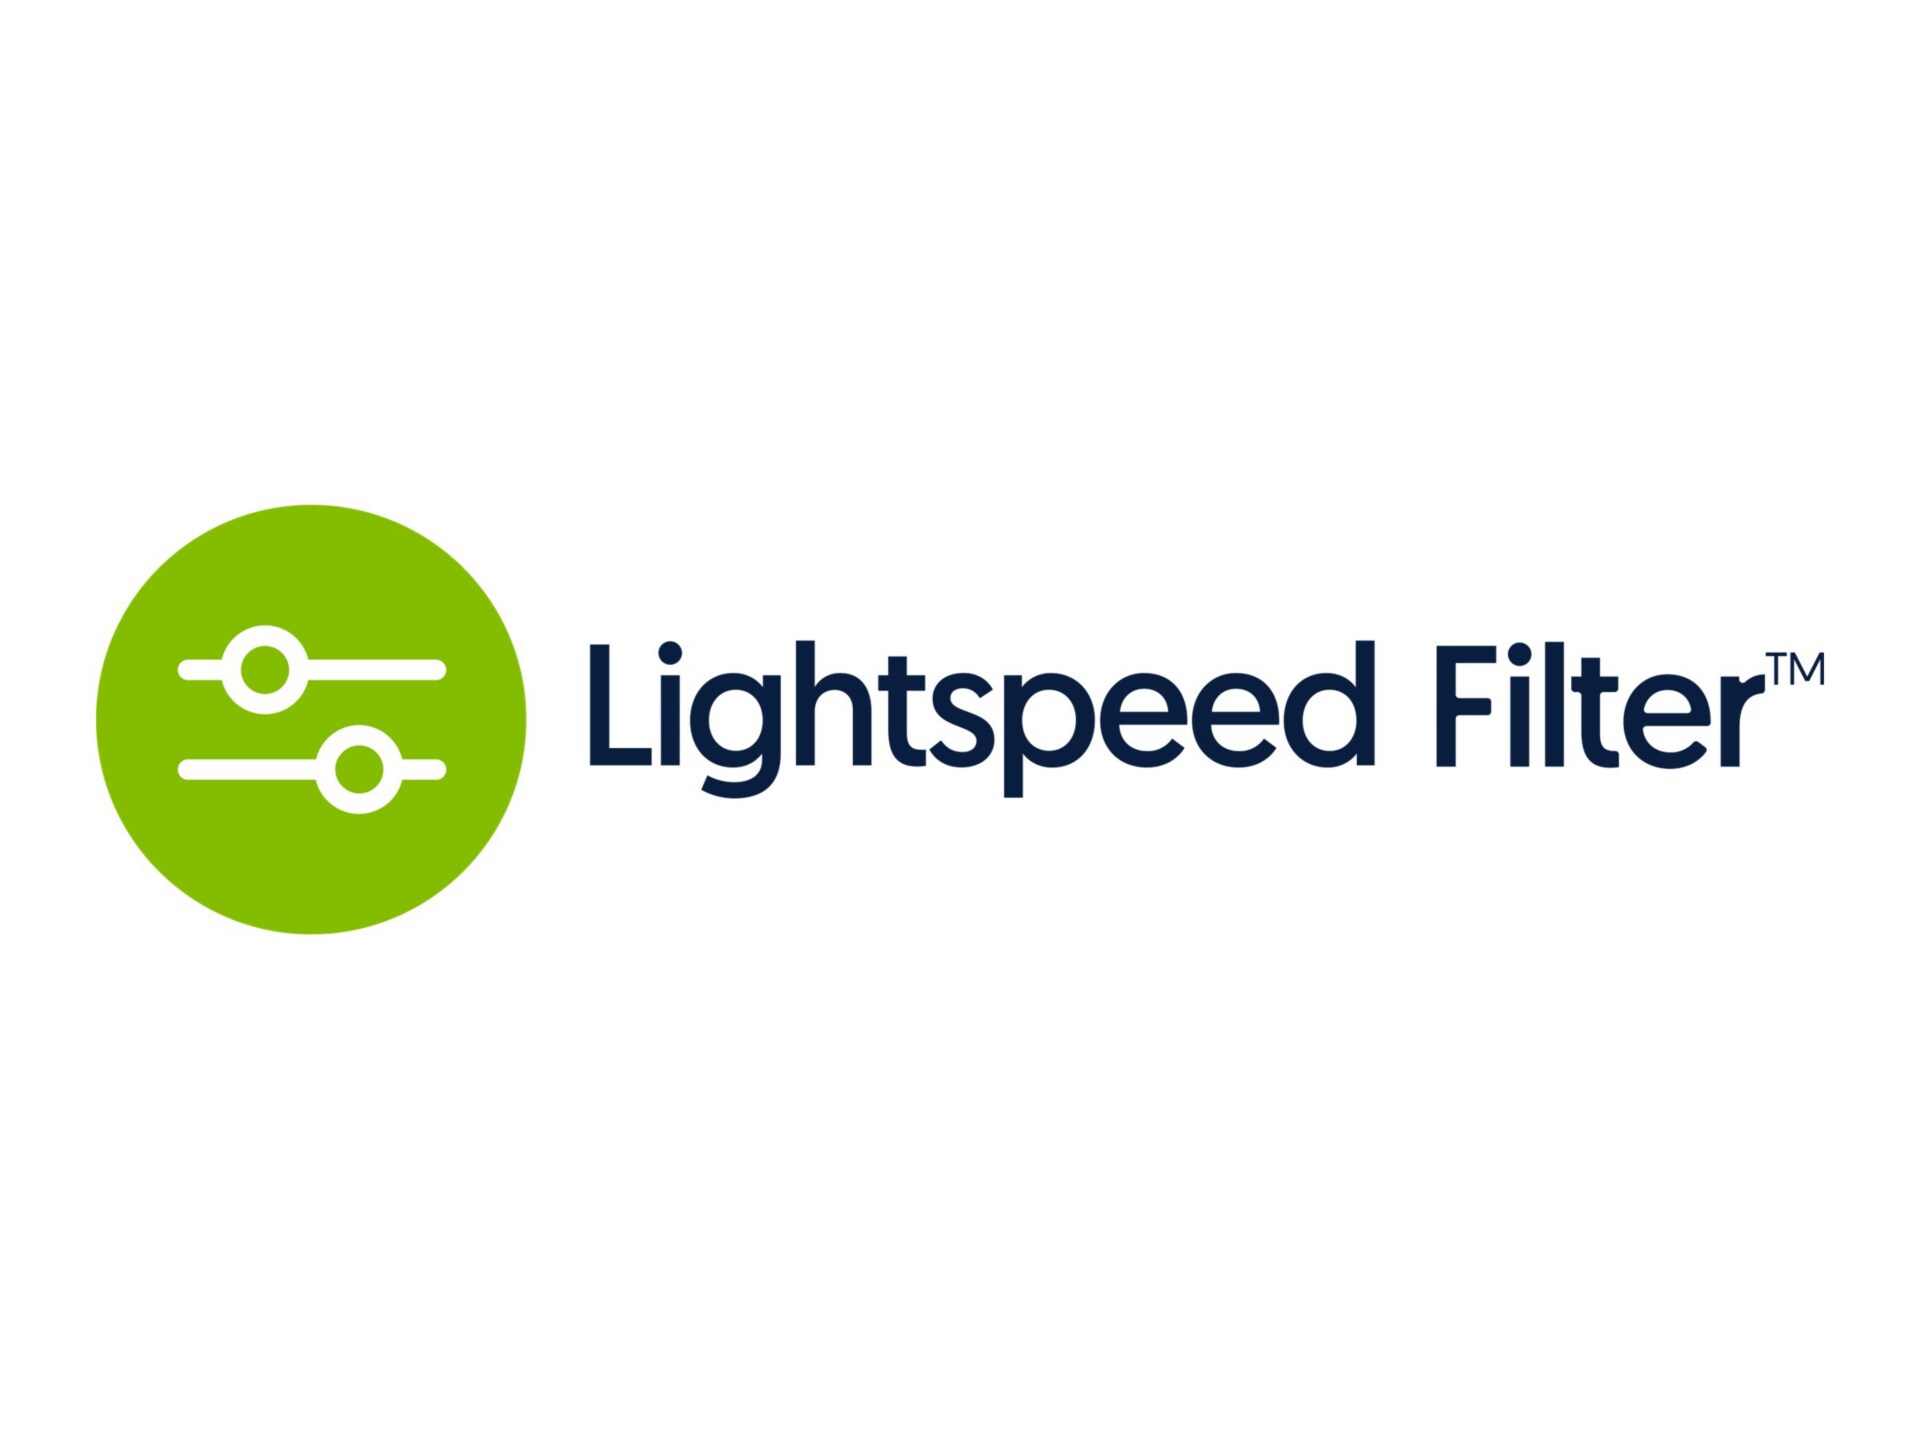 Lightspeed Filter - subscription license (1 year) - 1 license